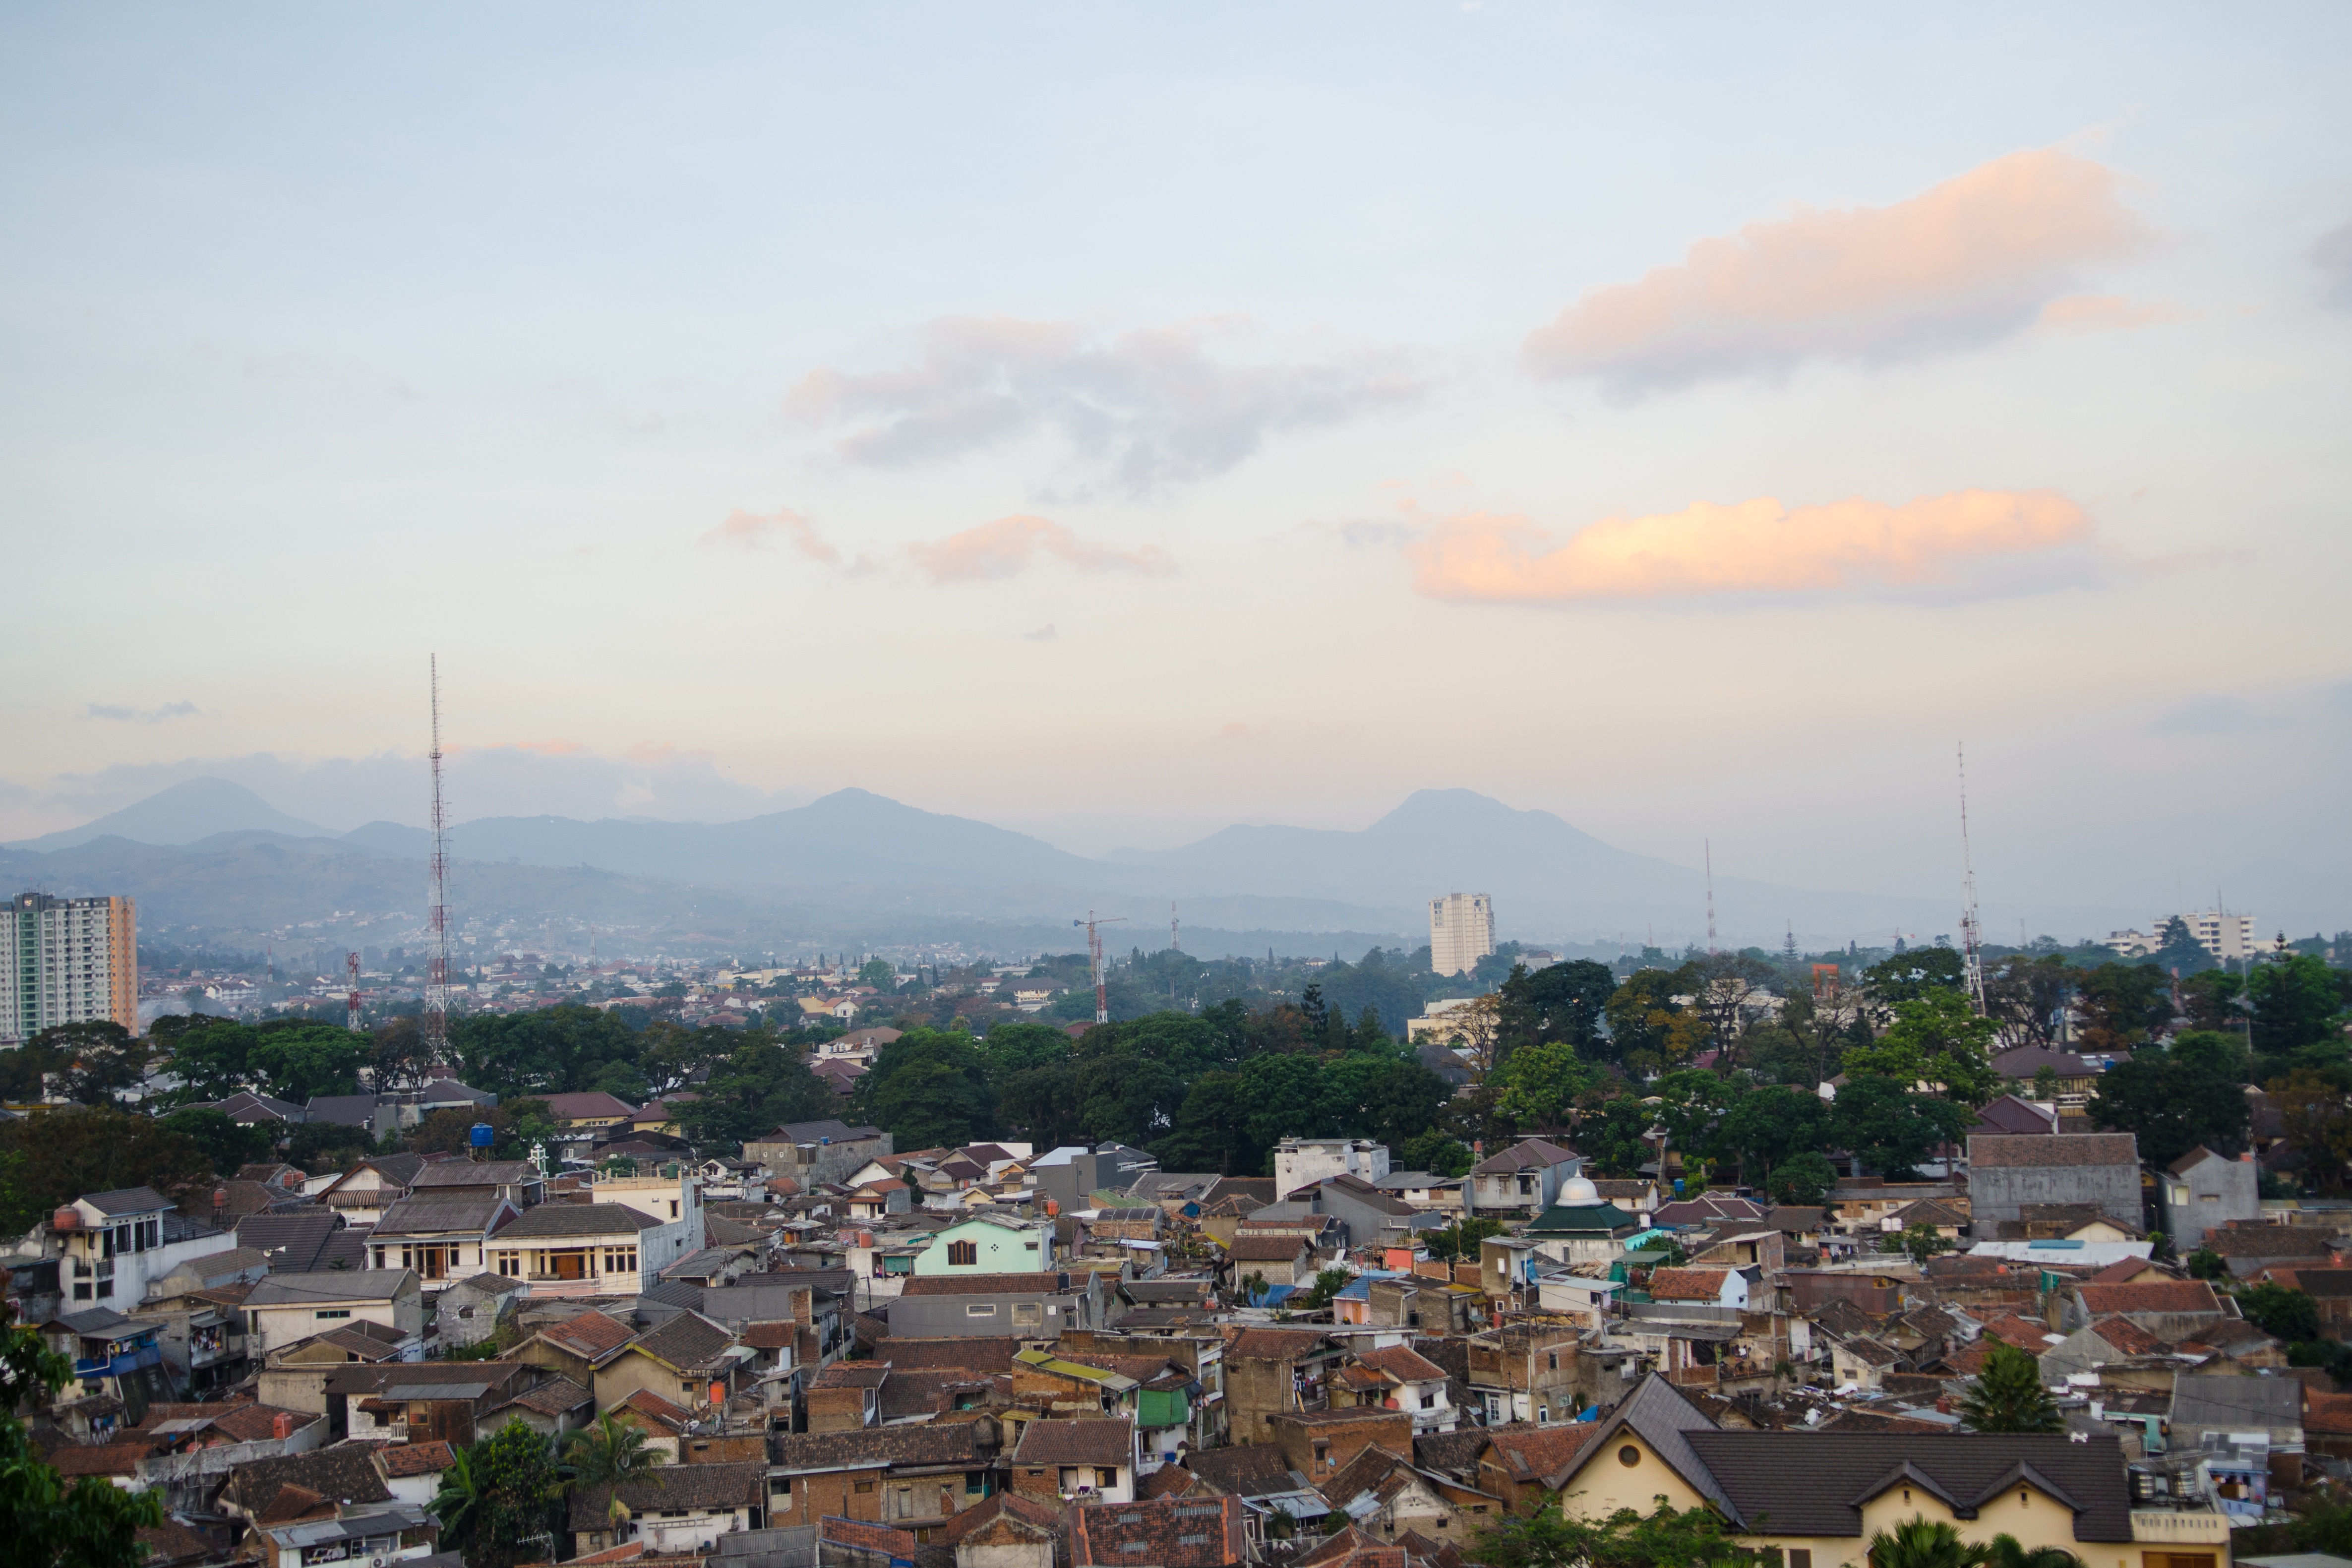 Elevation of Bojongkunci, Pameungpeuk, Bandung, West Java, Indonesia ...